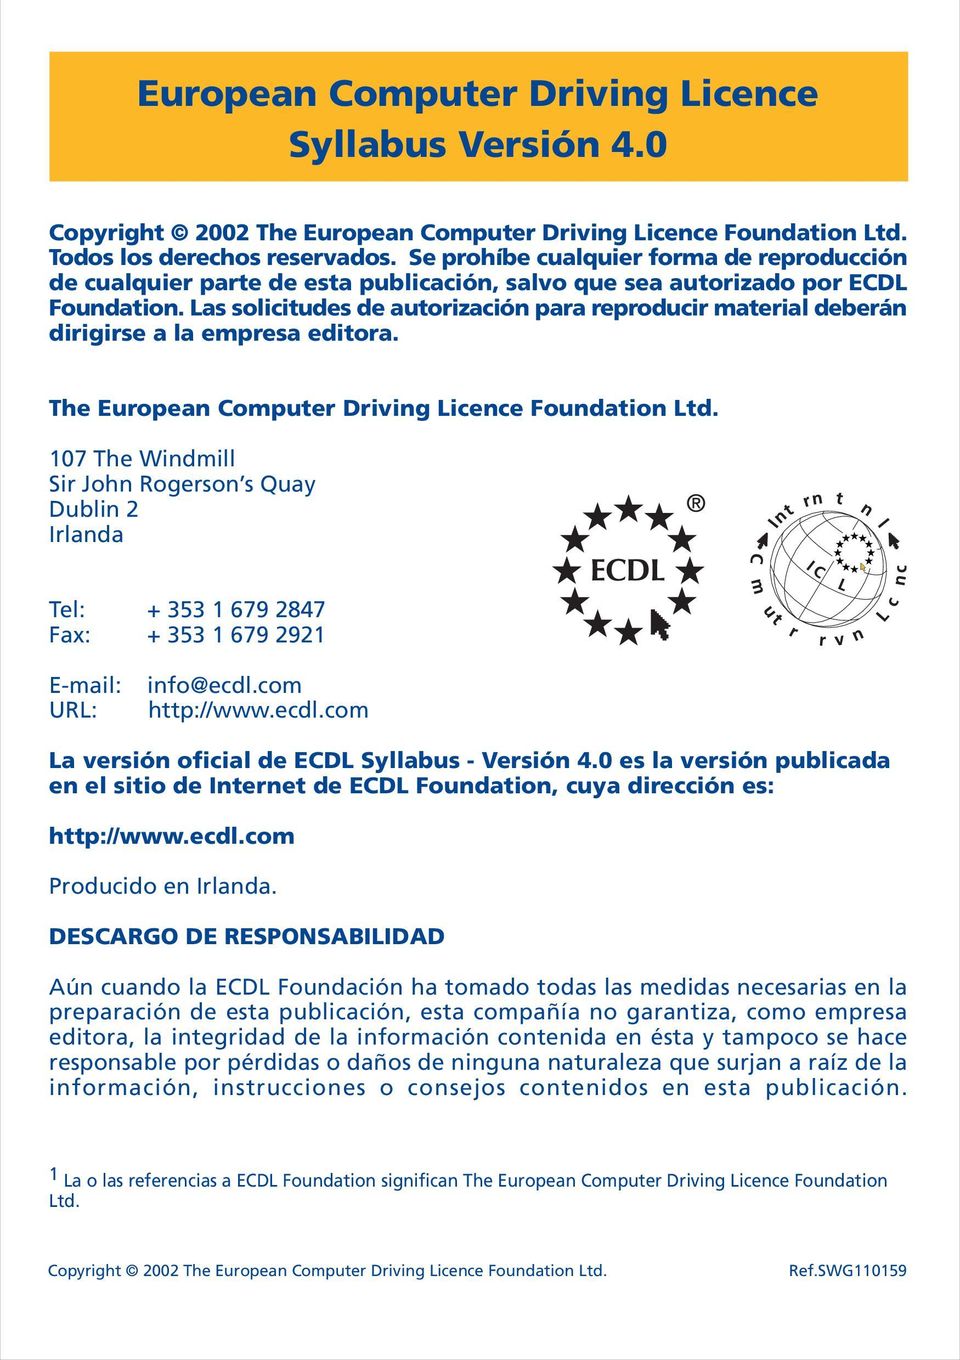 Las solicitudes de autorización para reproducir material deberán dirigirse a la empresa editora. The European Computer Driving Licence Foundation Ltd.